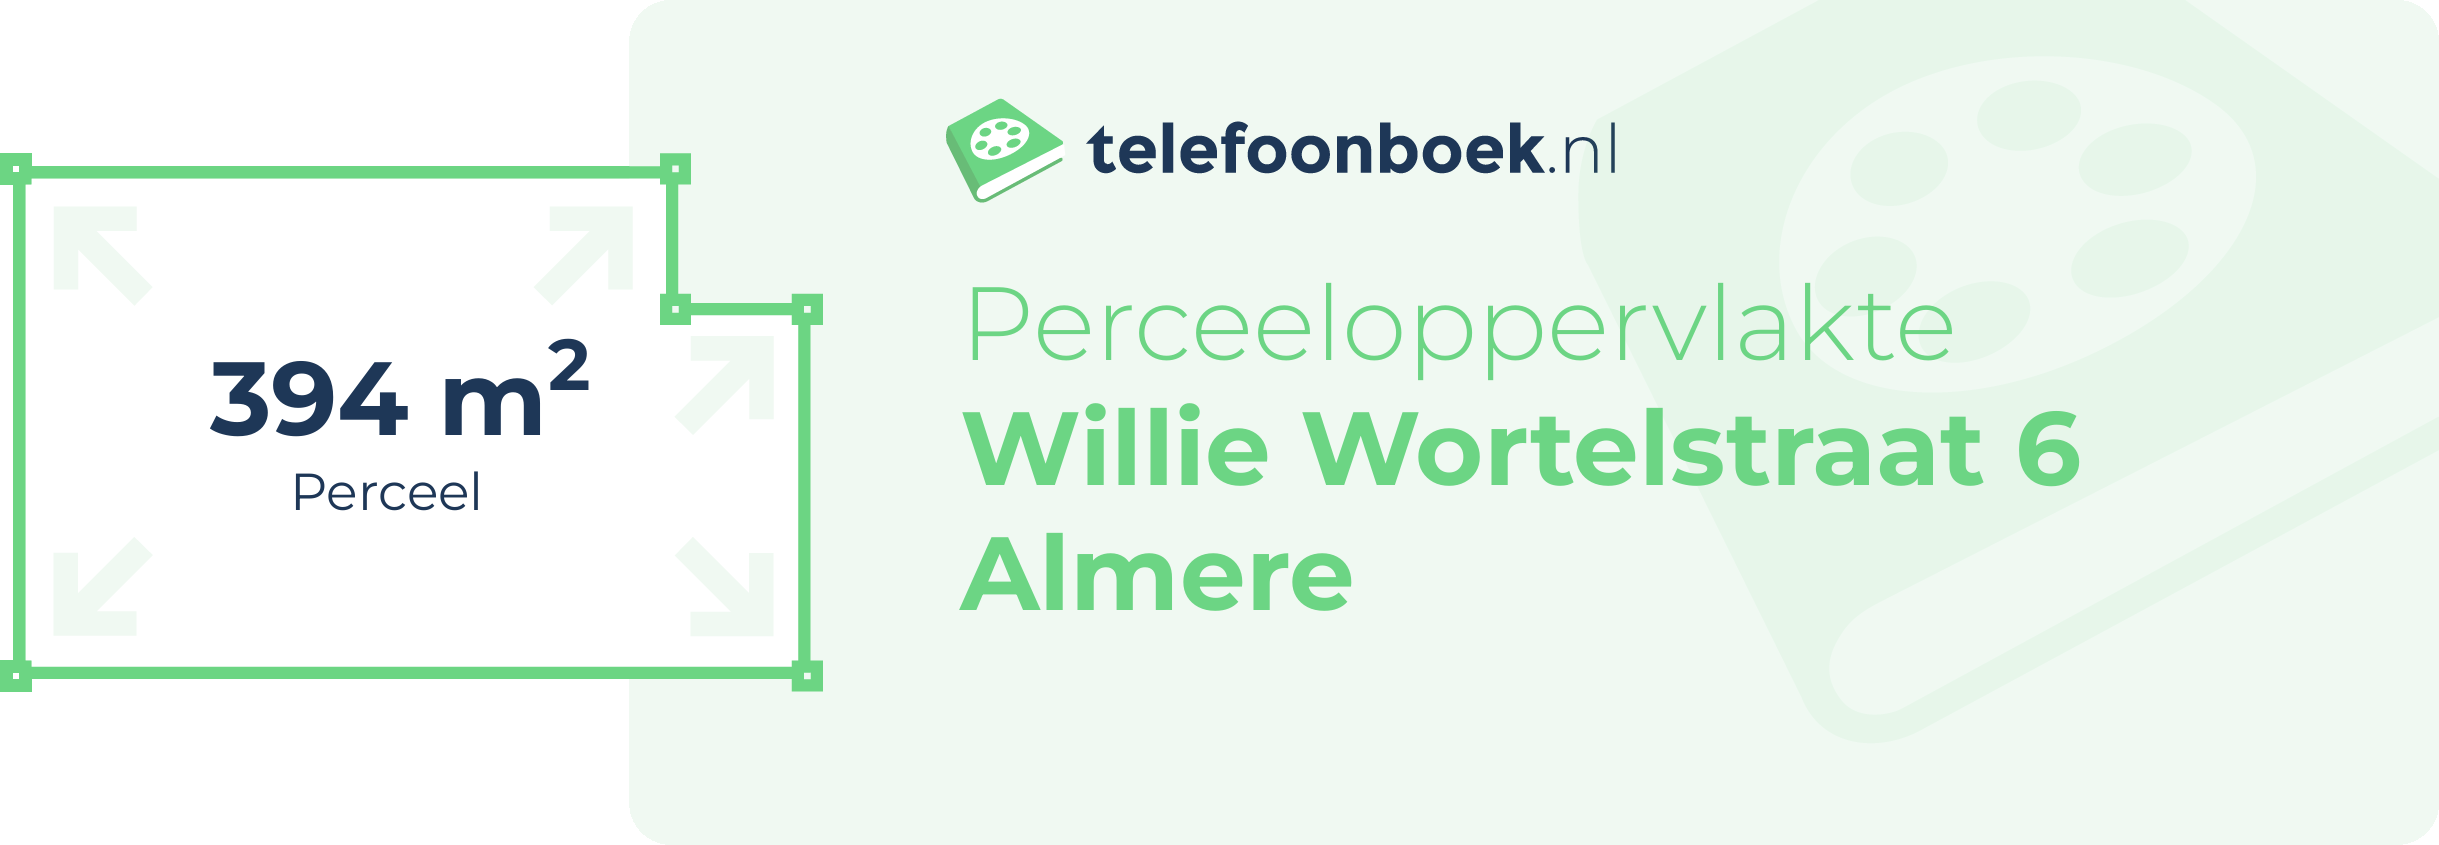 Perceeloppervlakte Willie Wortelstraat 6 Almere